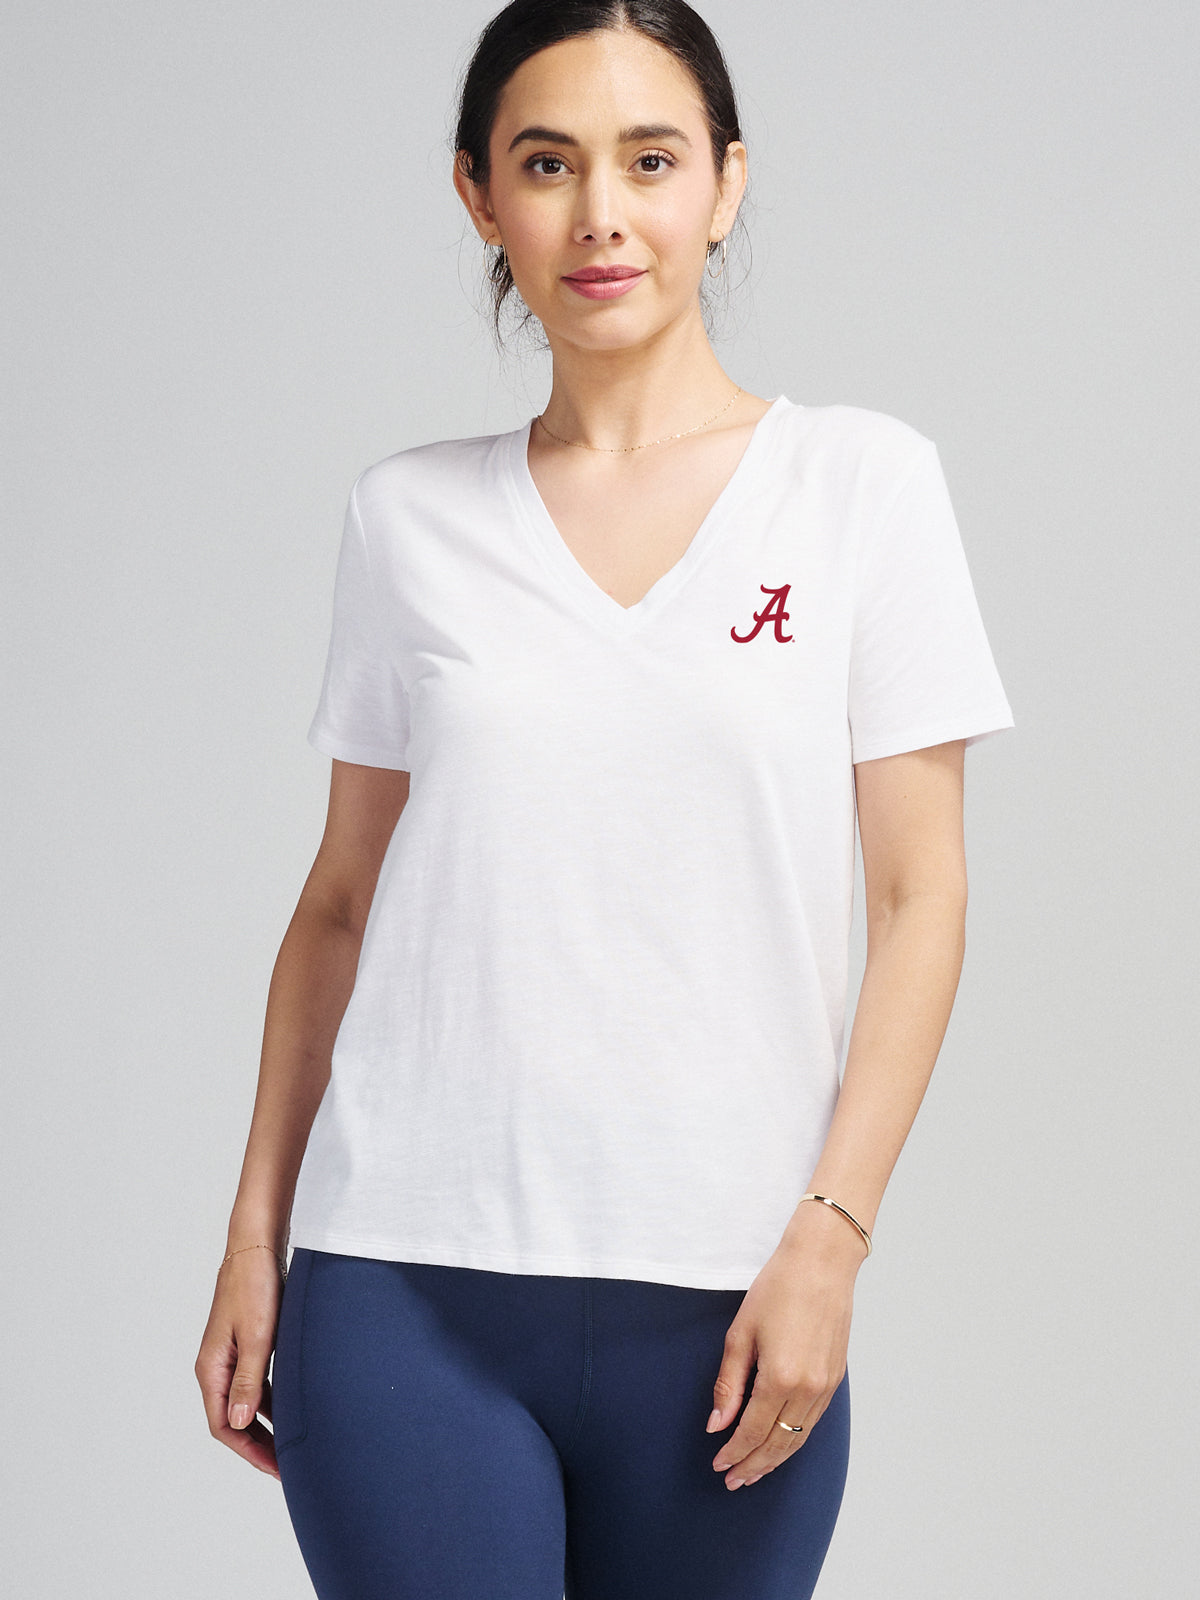 NOLA V-Neck T-Shirt - Alabama - tasc Performance (White)